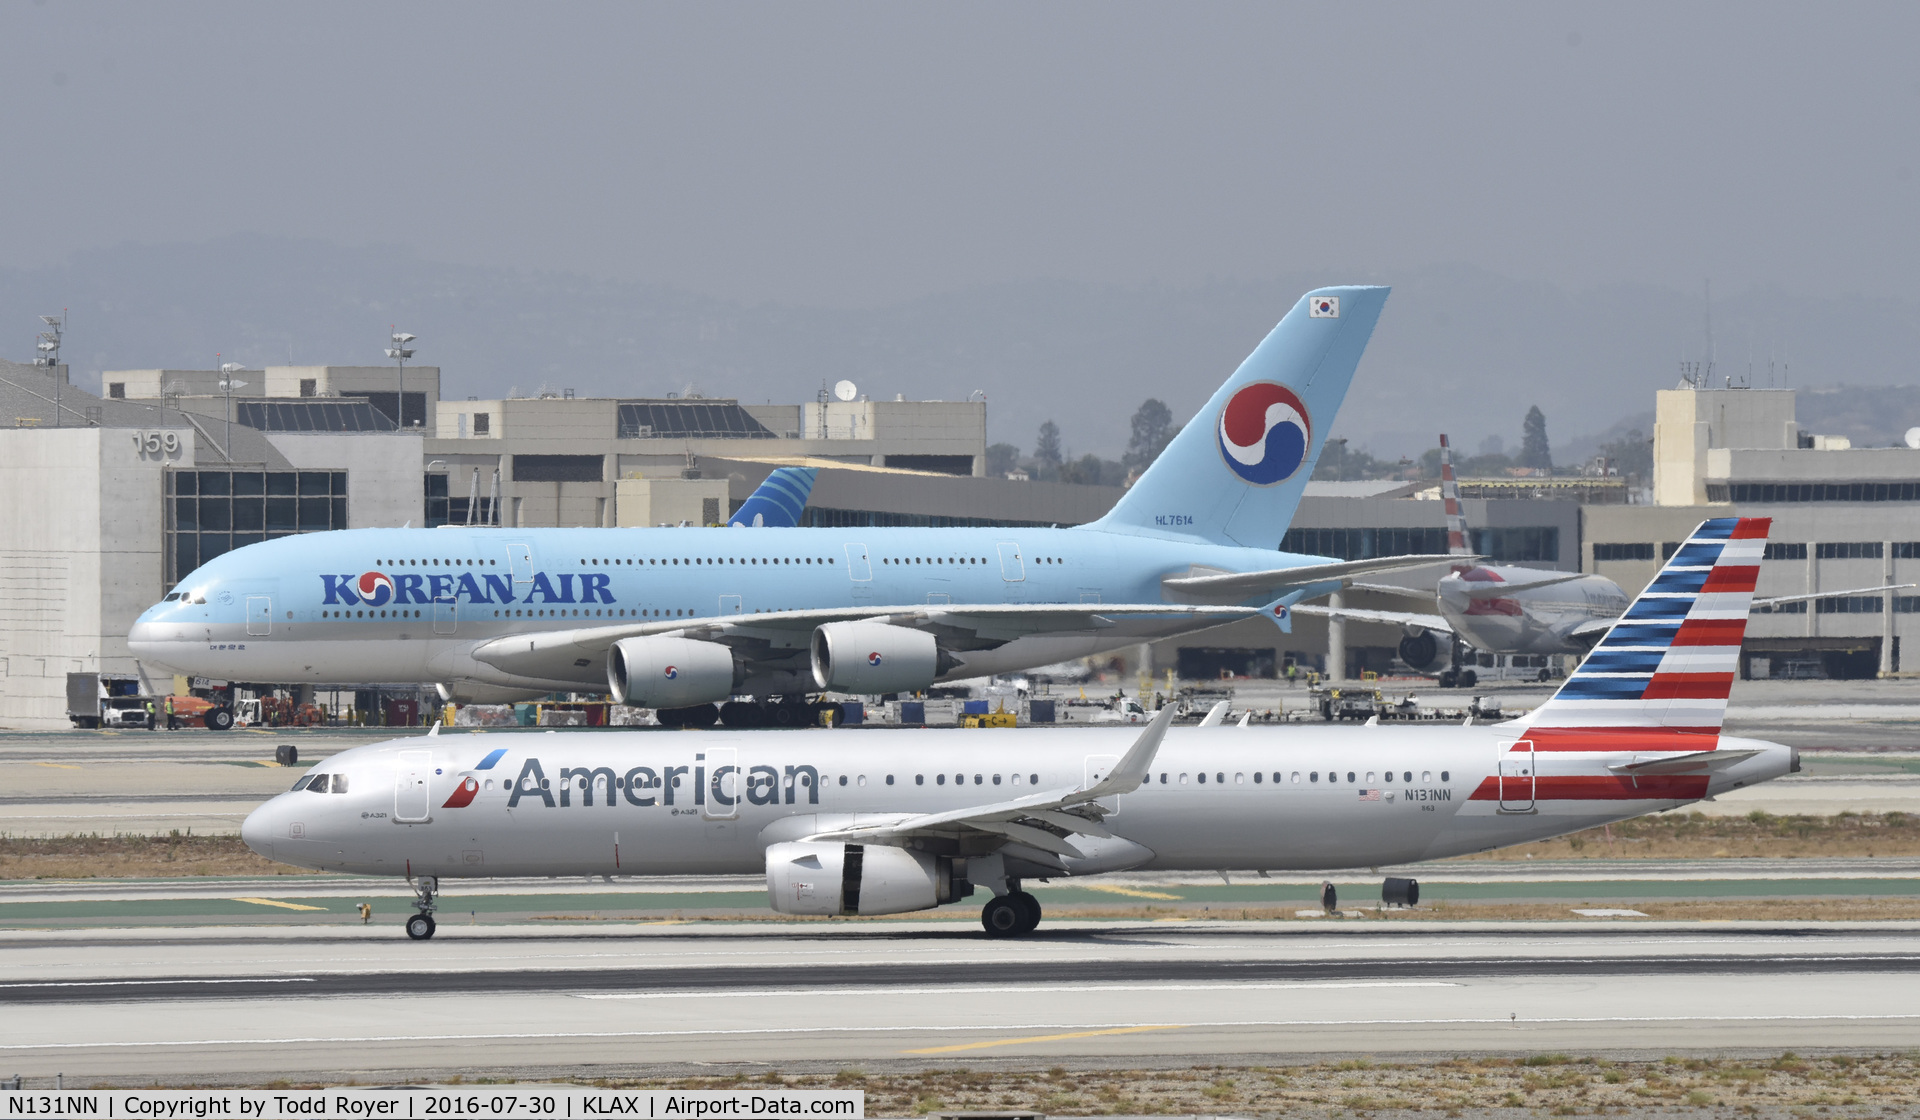 N131NN, 2014 Airbus A321-231 C/N 6472, Arrived at LAX on 25L